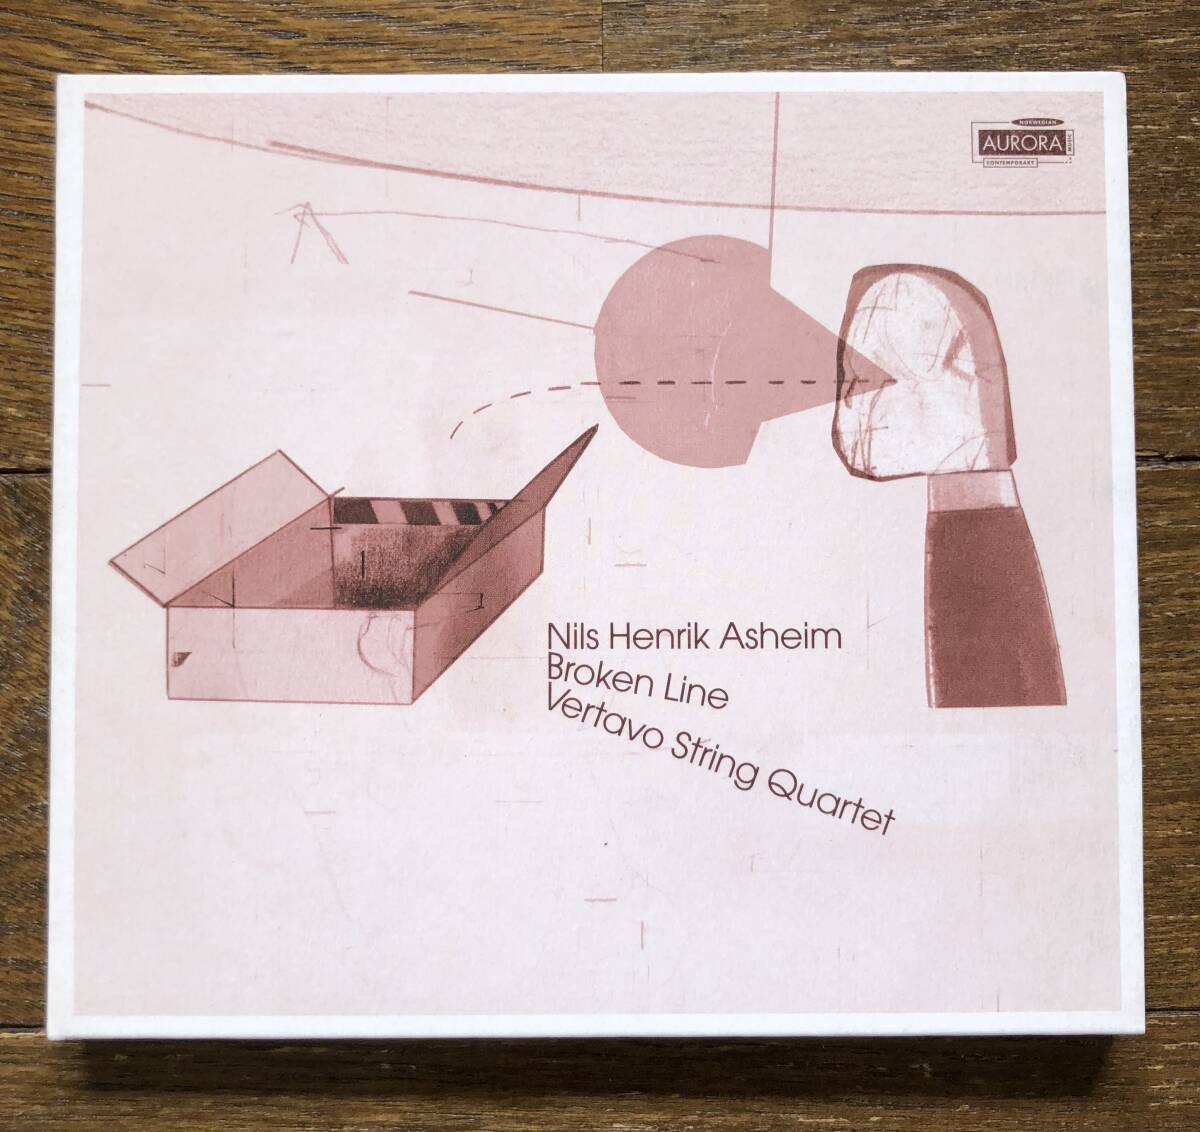 CD-May / Nilis Henrik Asheim / Broken Line / VertavoString Quartet